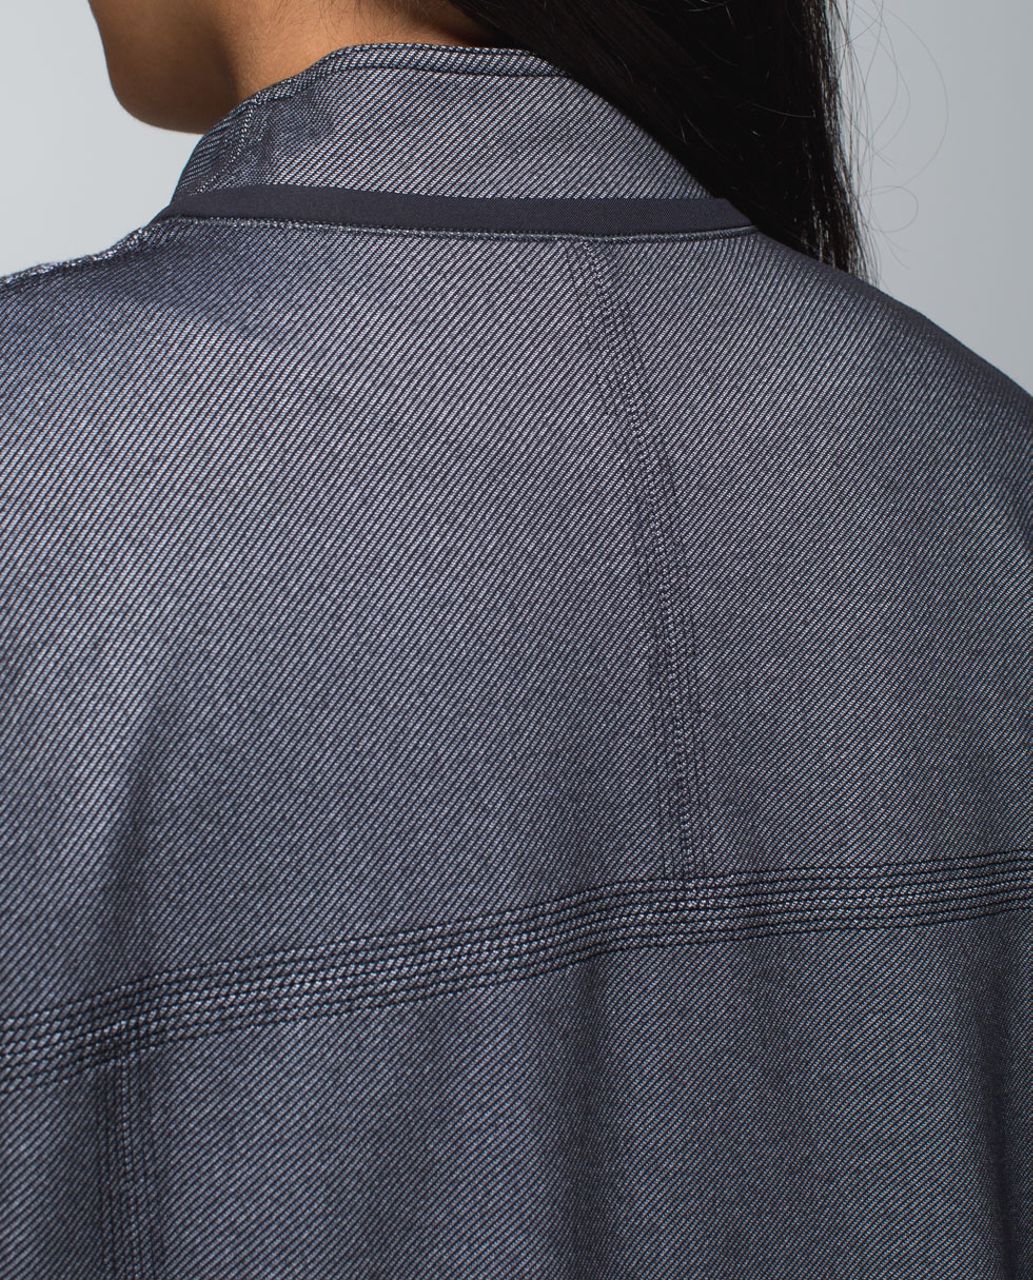 Lululemon Black And Gray Cocoon Car Coat Longline Snap Front Jacket Size XS